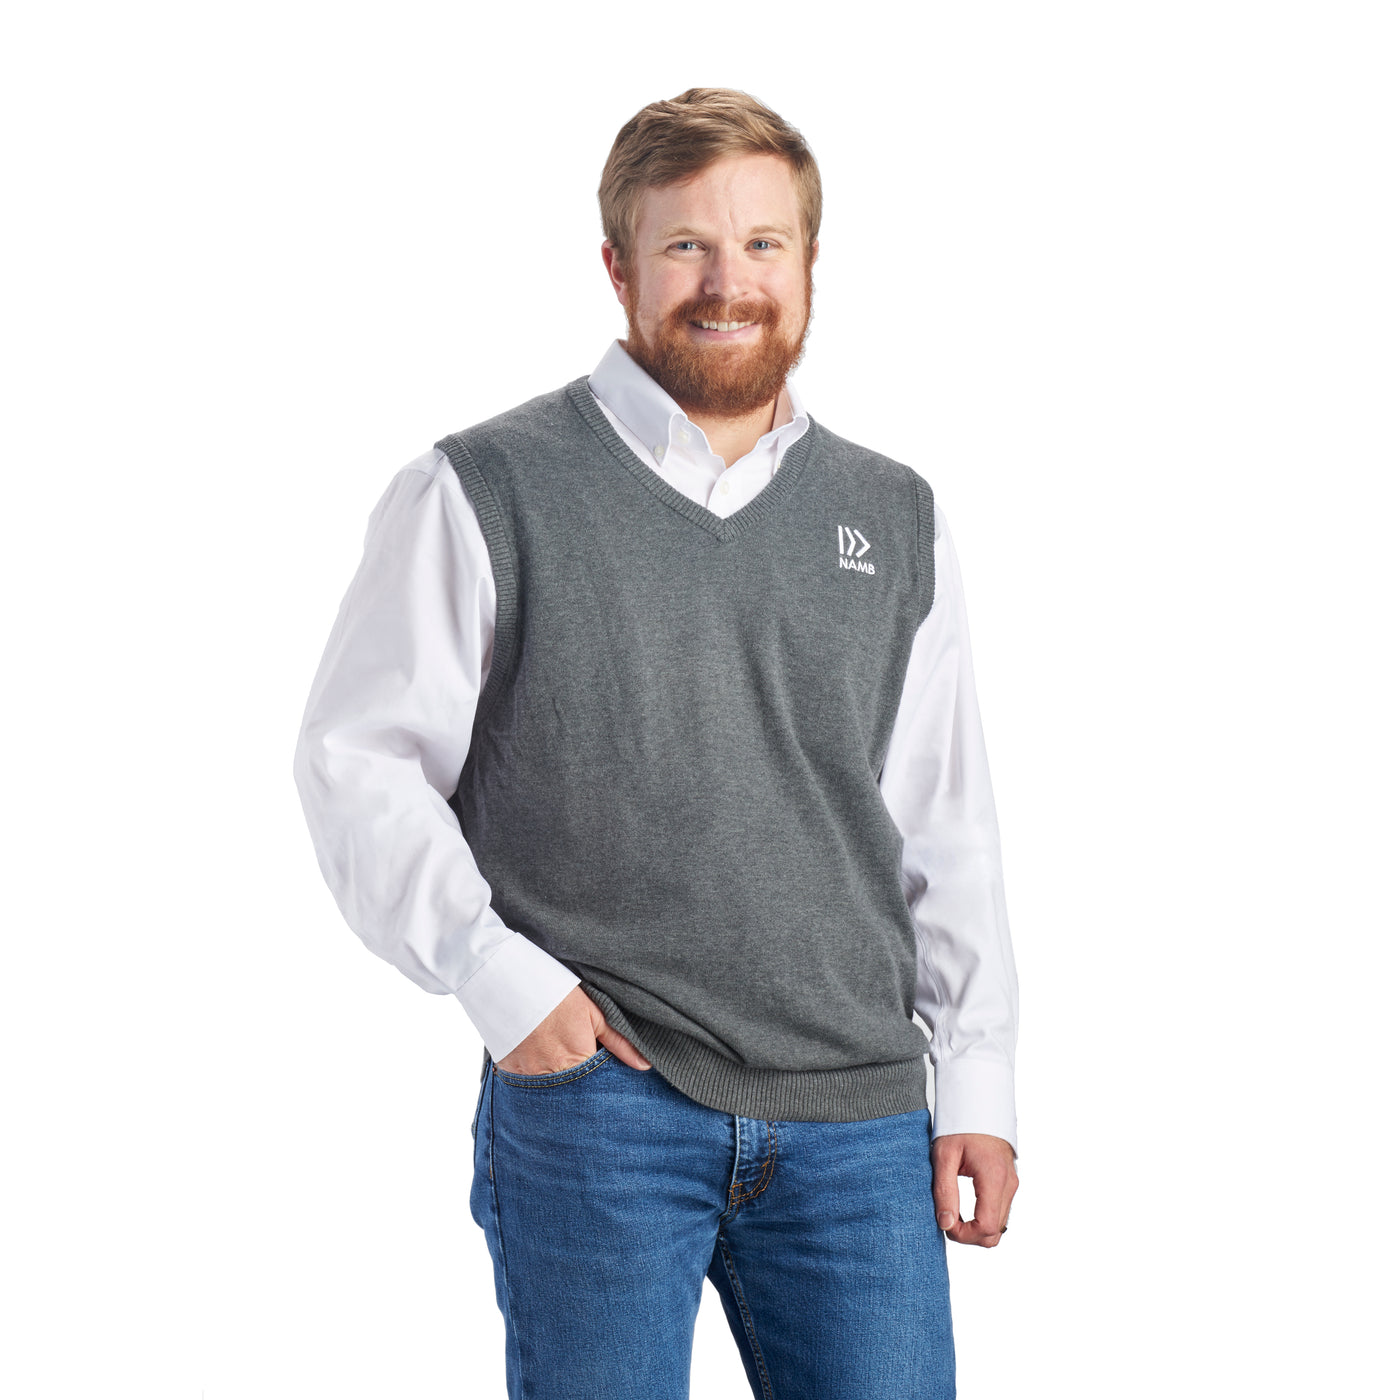 NAMB Sweater Vest (Gray)